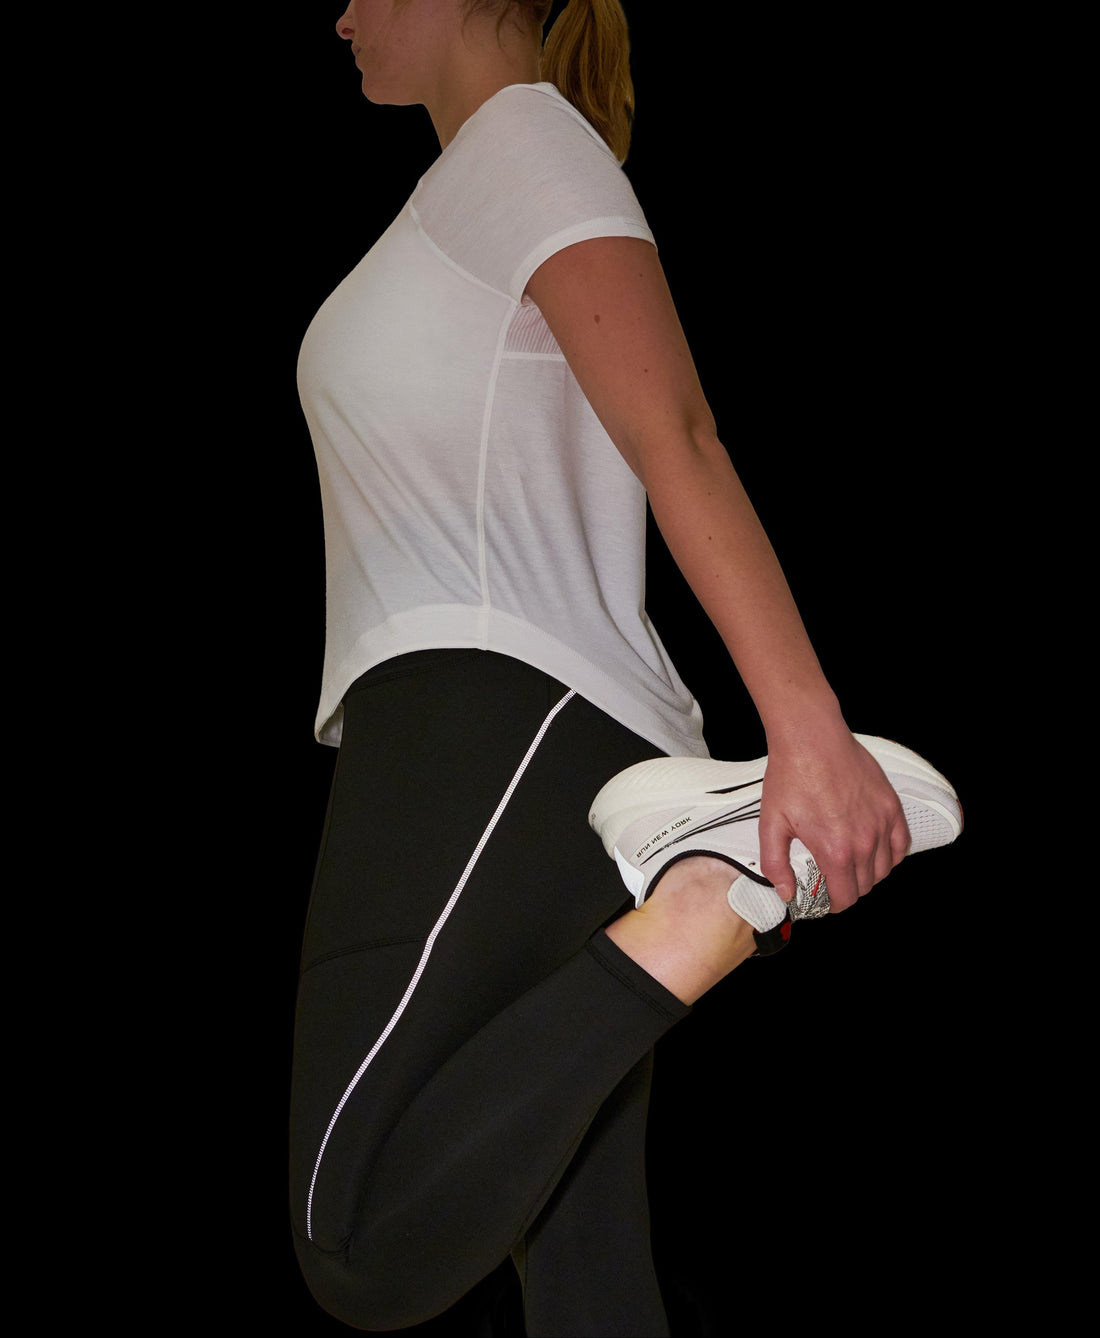 Grey Therma Boost 2.0 reflective running leggings